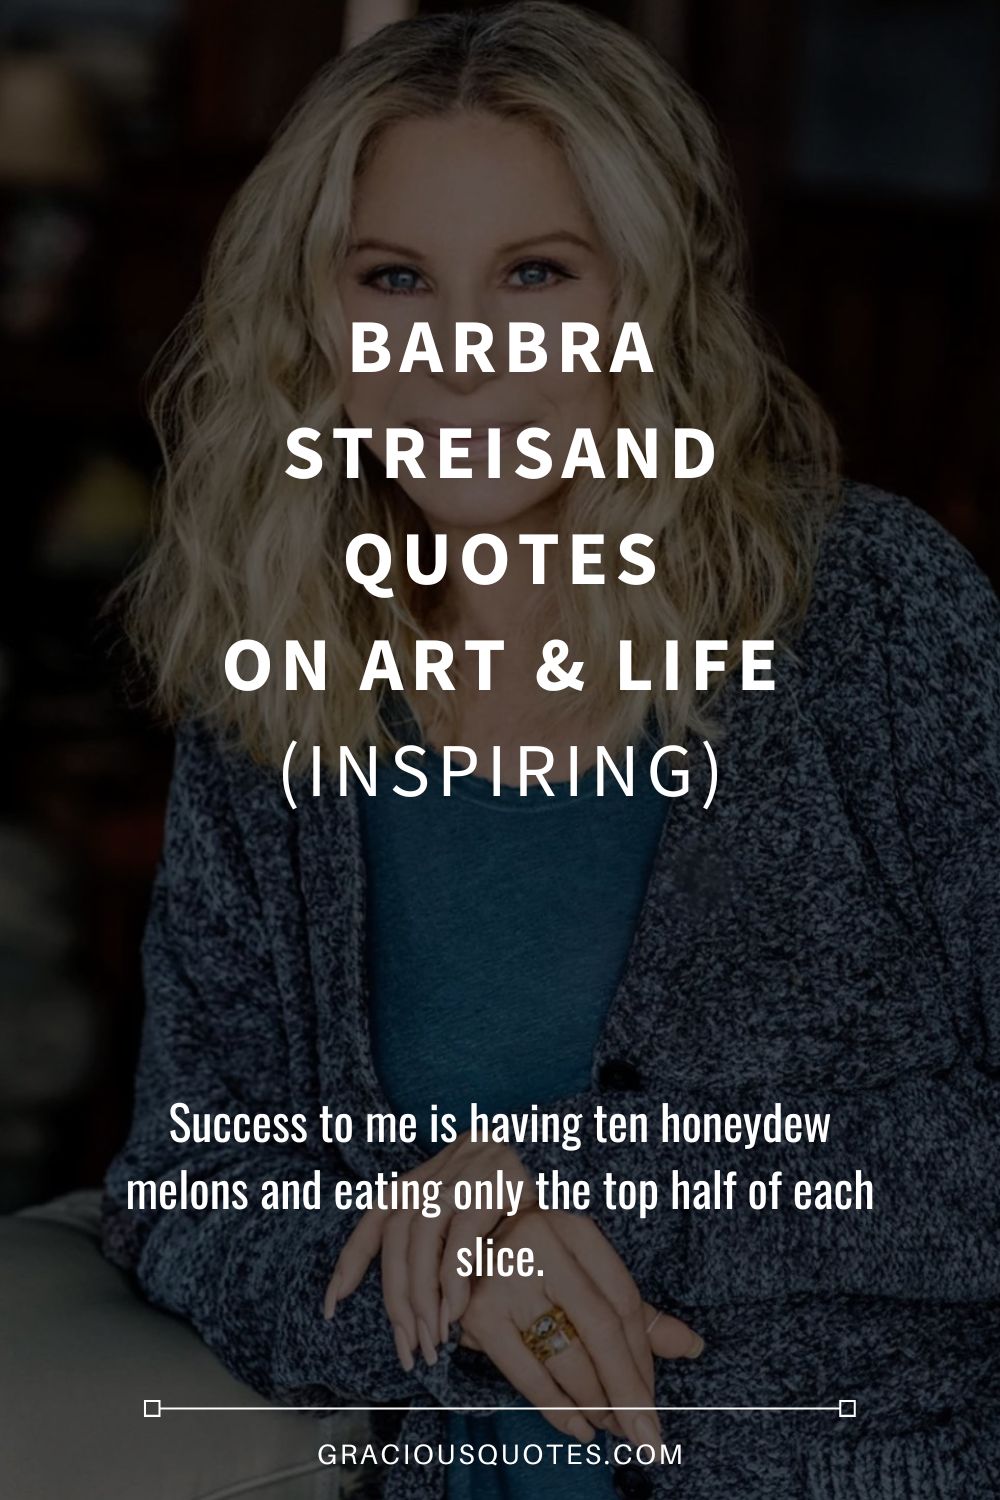 Barbra Streisand Quotes on Art & Life (INSPIRING) - Gracious Quotes